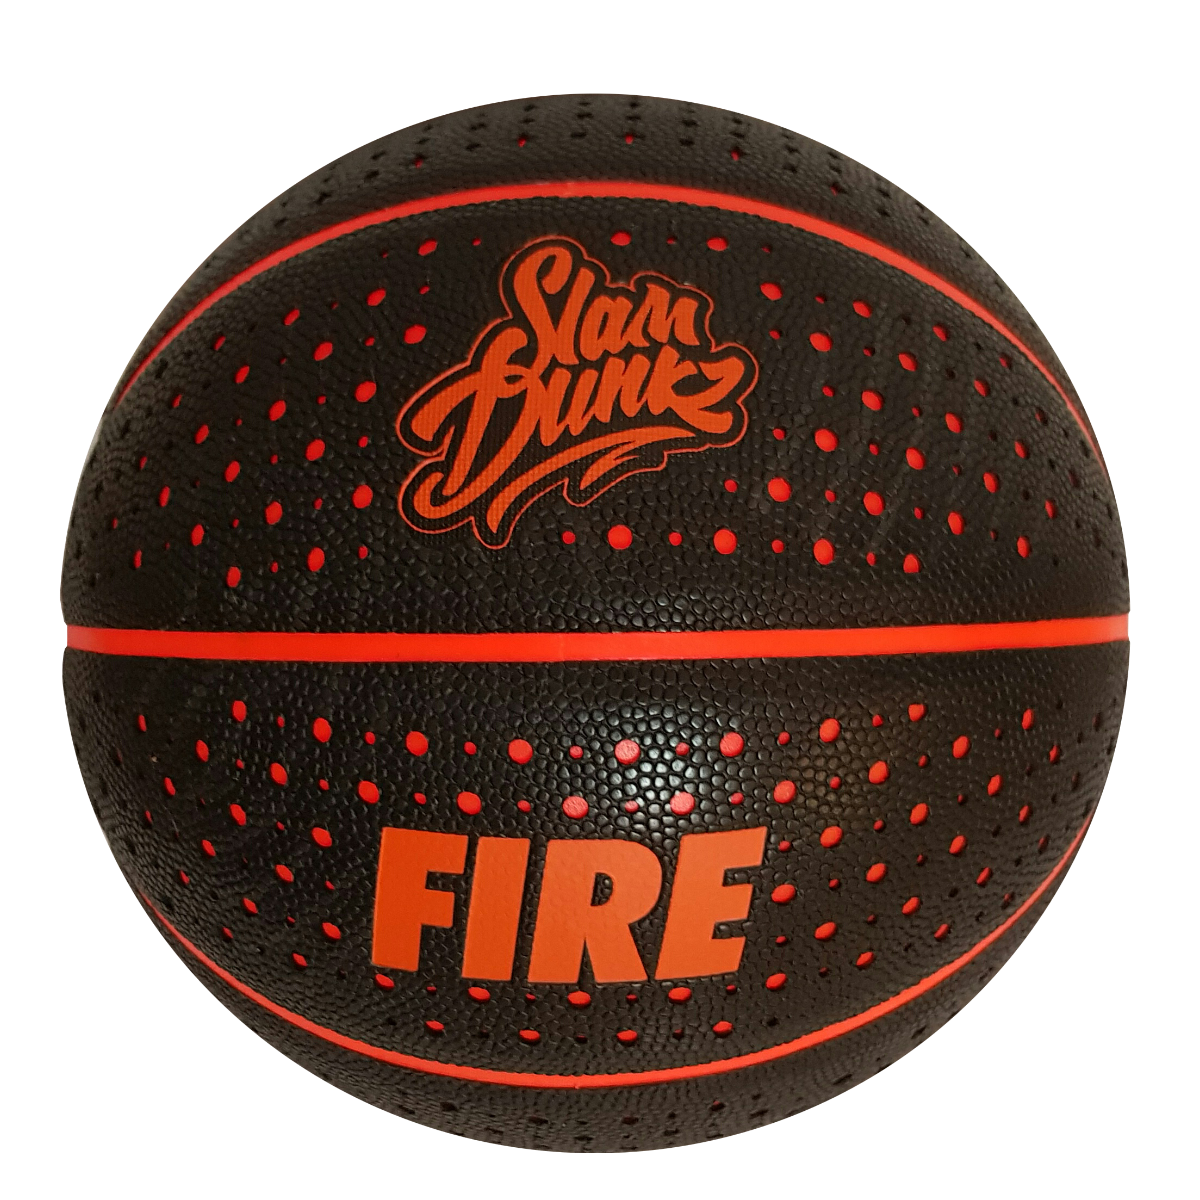 Slamdunkz - Fire Led Basketball PREORDER